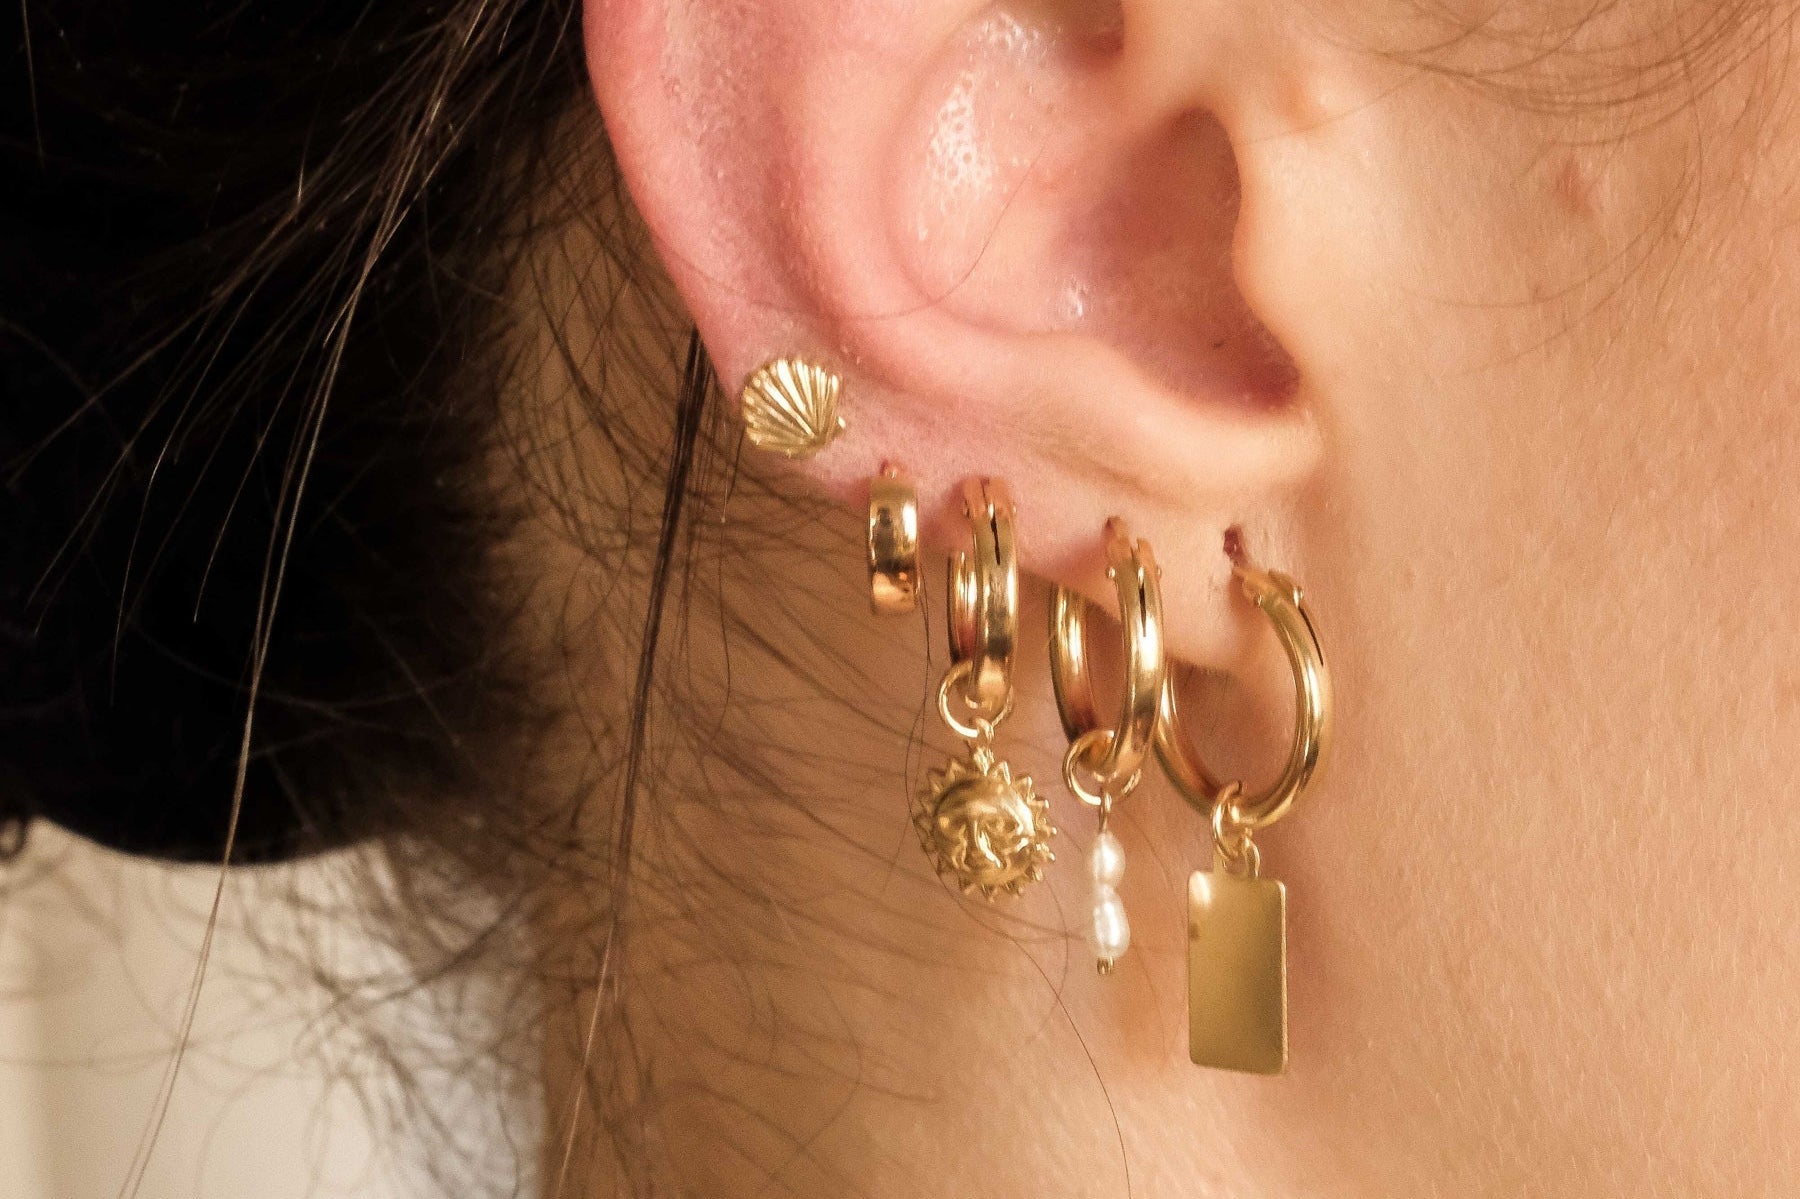 Mix & Match Double Mini Pearls Charm - S-kin Studio Jewelry | Minimal Jewellery That Lasts.